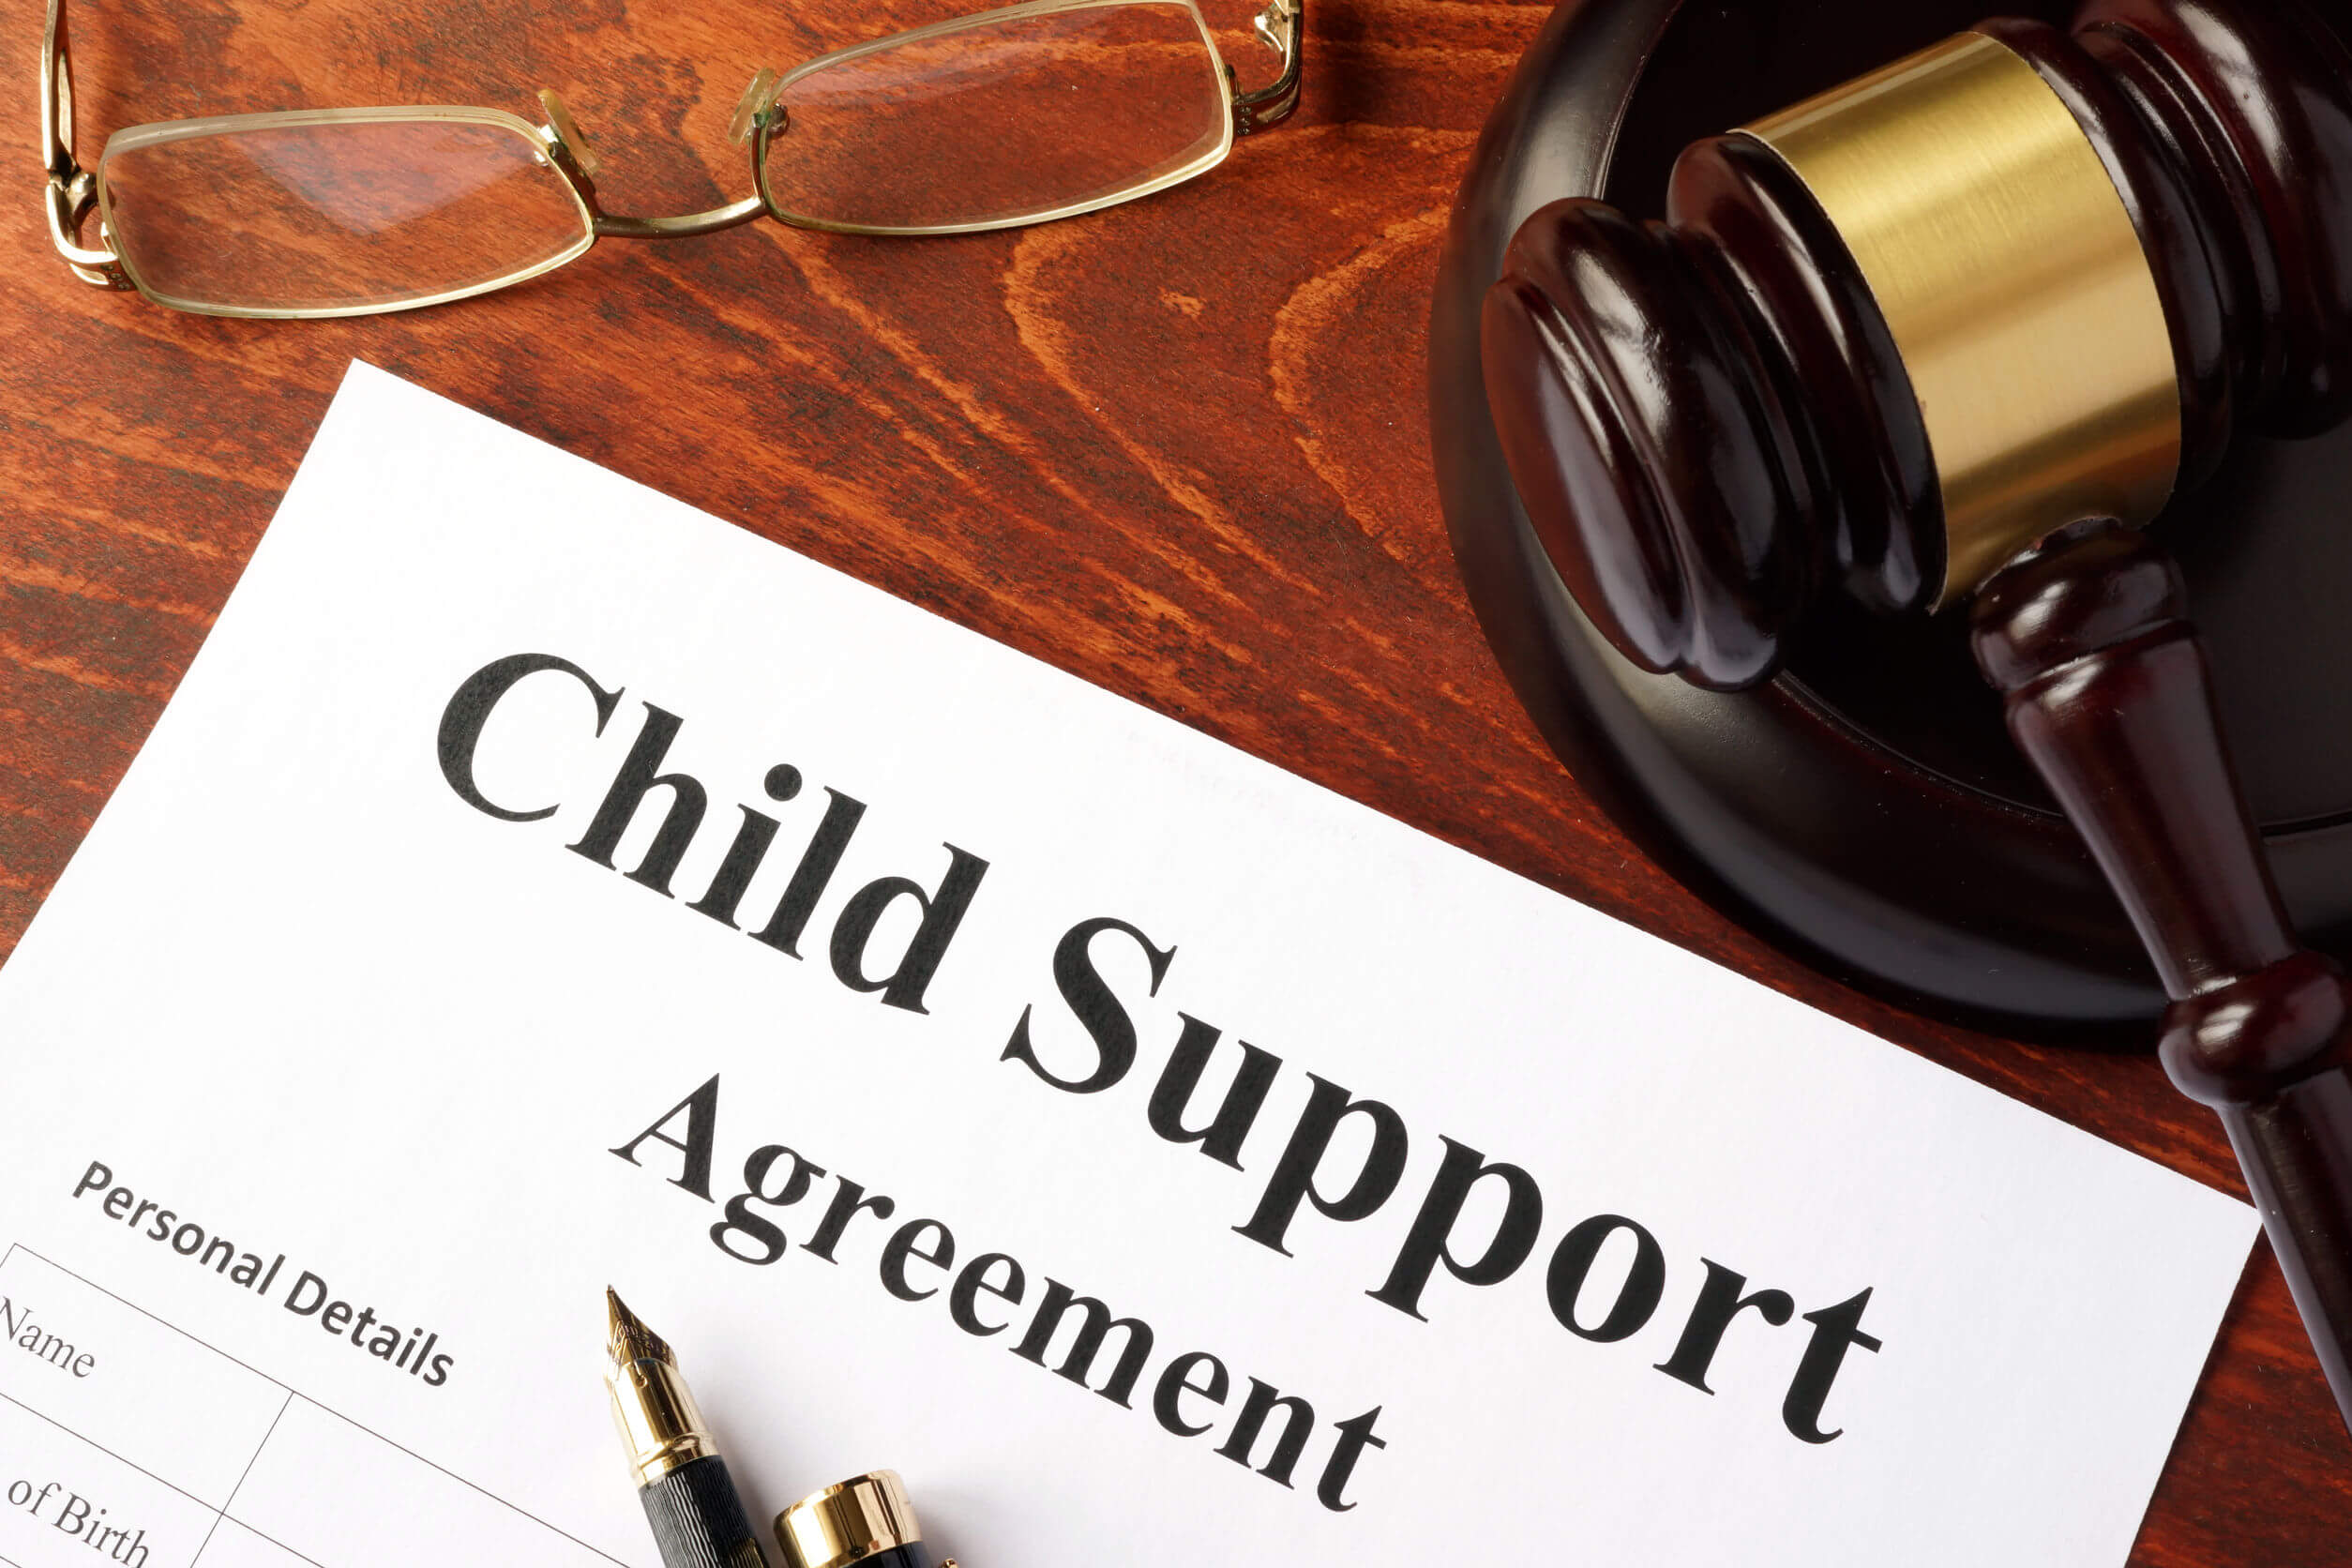 Enforce Child Support